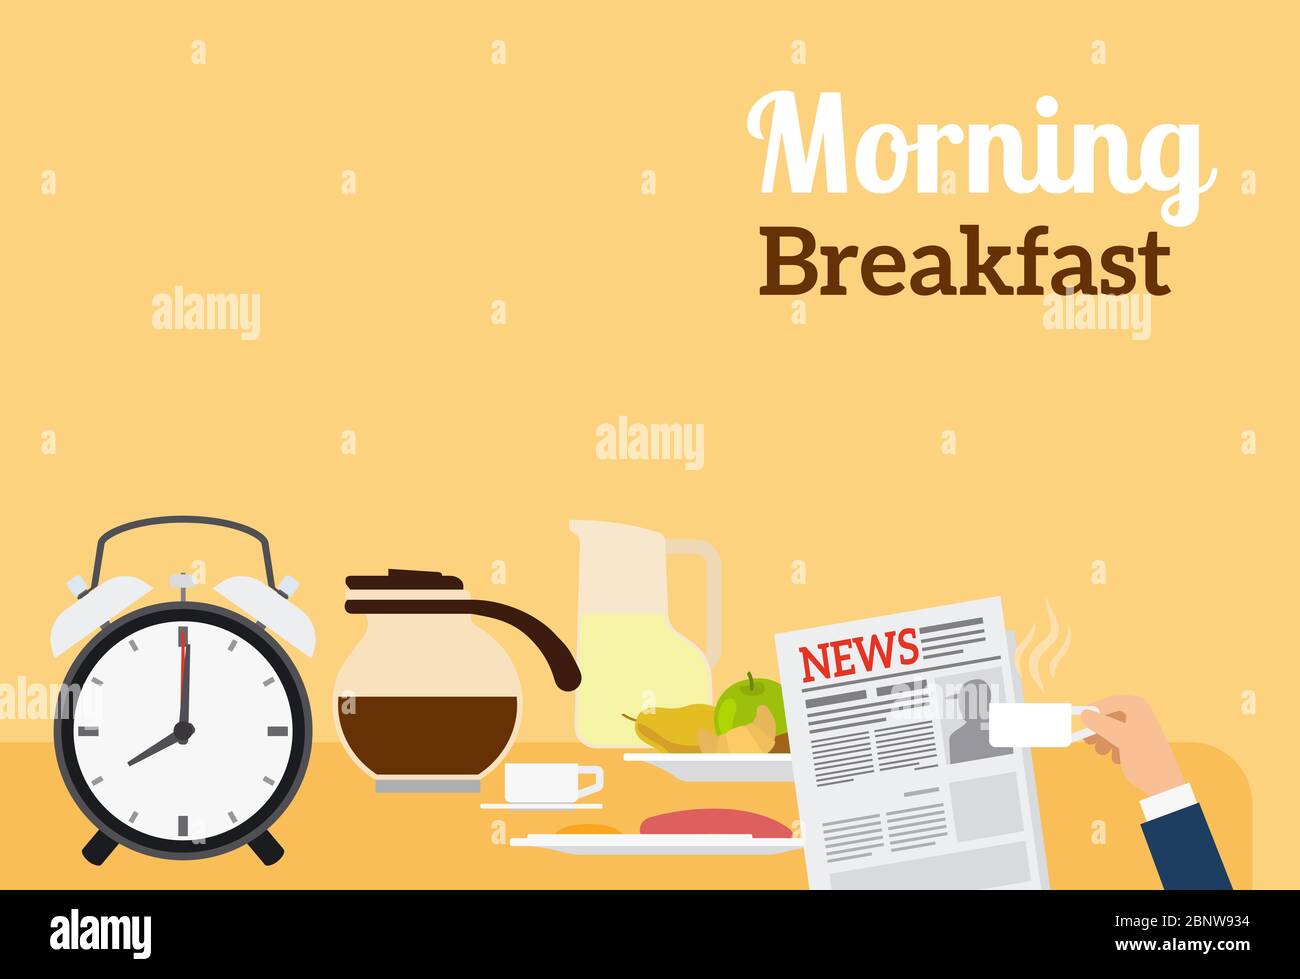 Good Morning Breakfast Banner with sign on orange background. Vector illustration Stock Vector